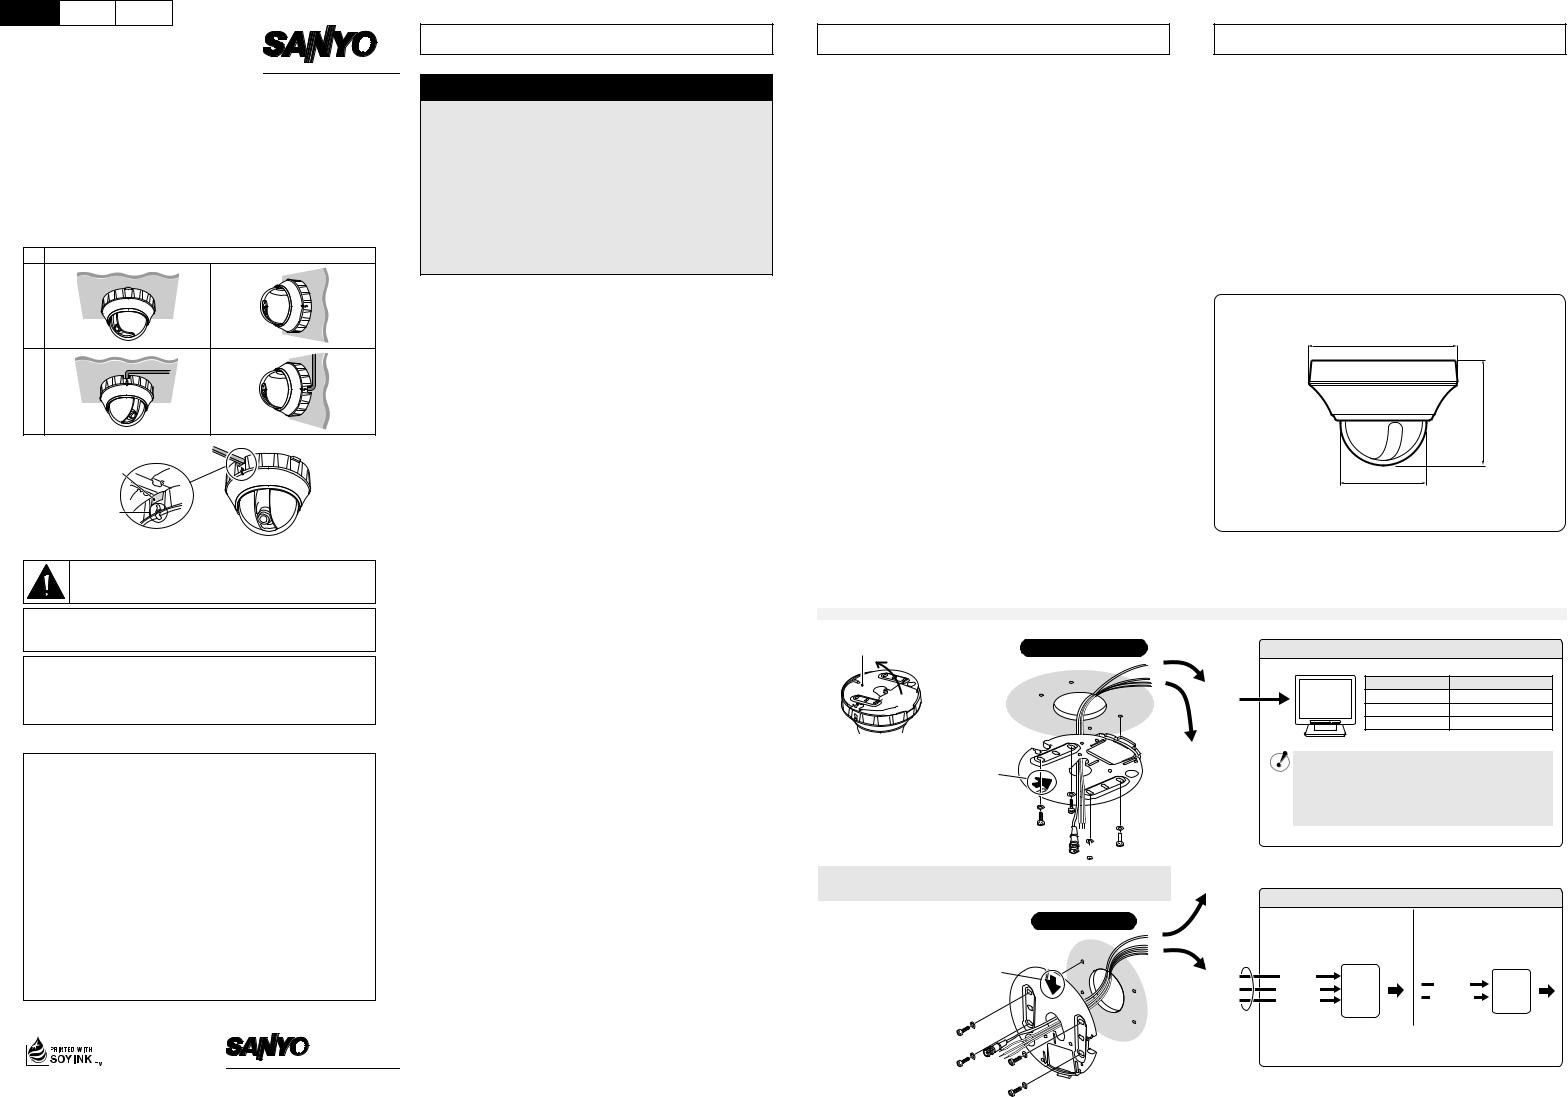 Sanyo VCC-9684VA User Manual